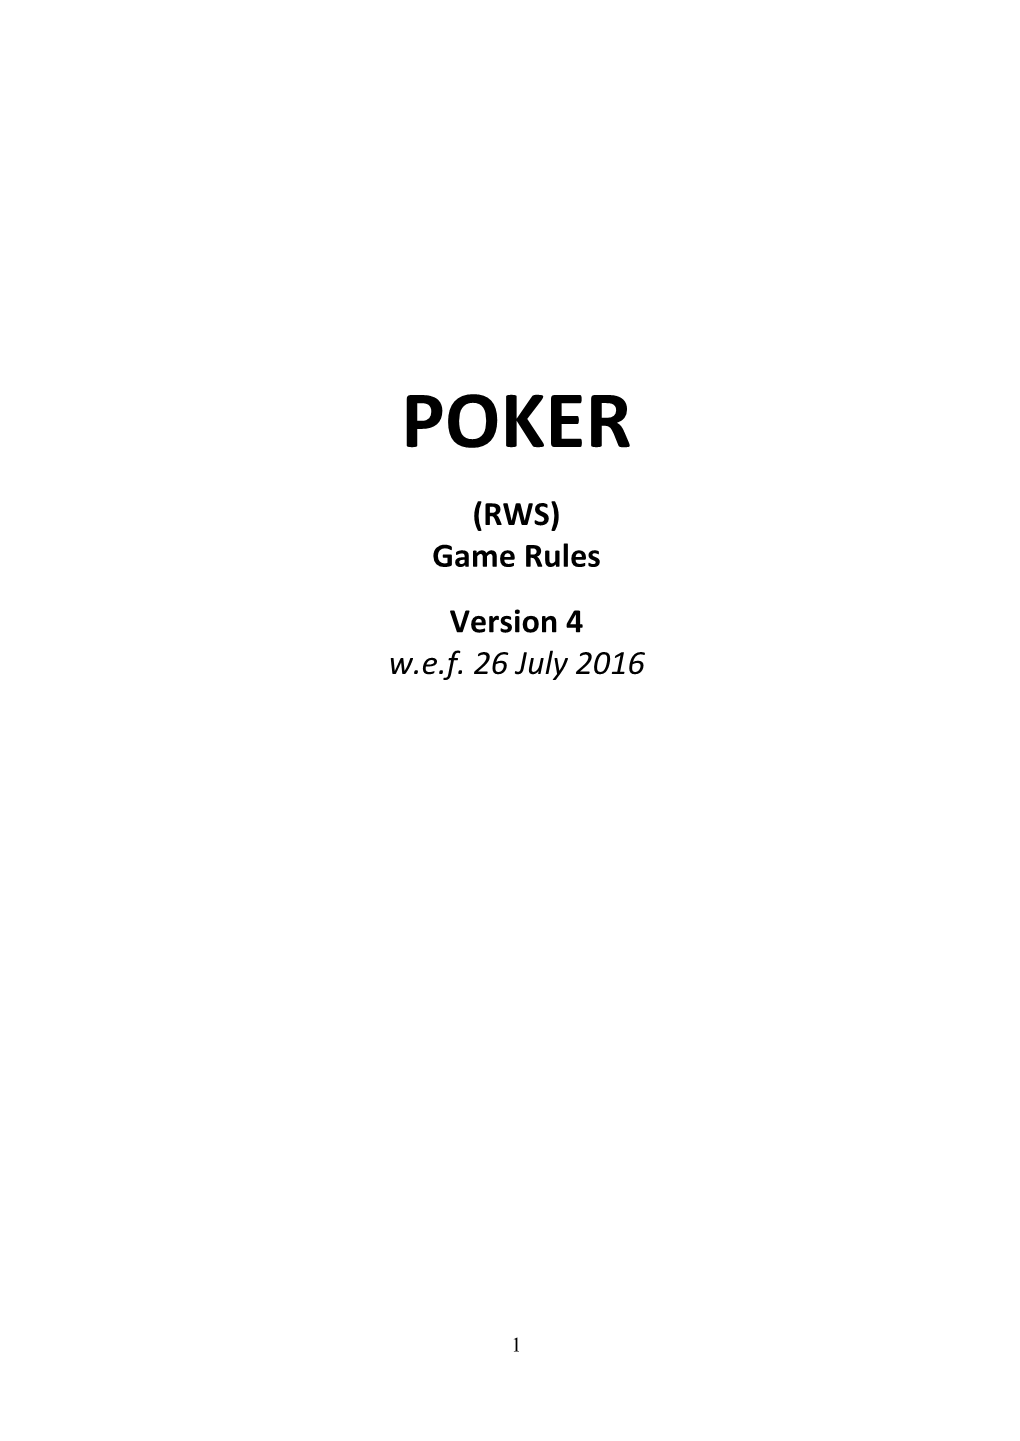 (RWS) Game Rules Version 4 W.E.F. 26 July 2016